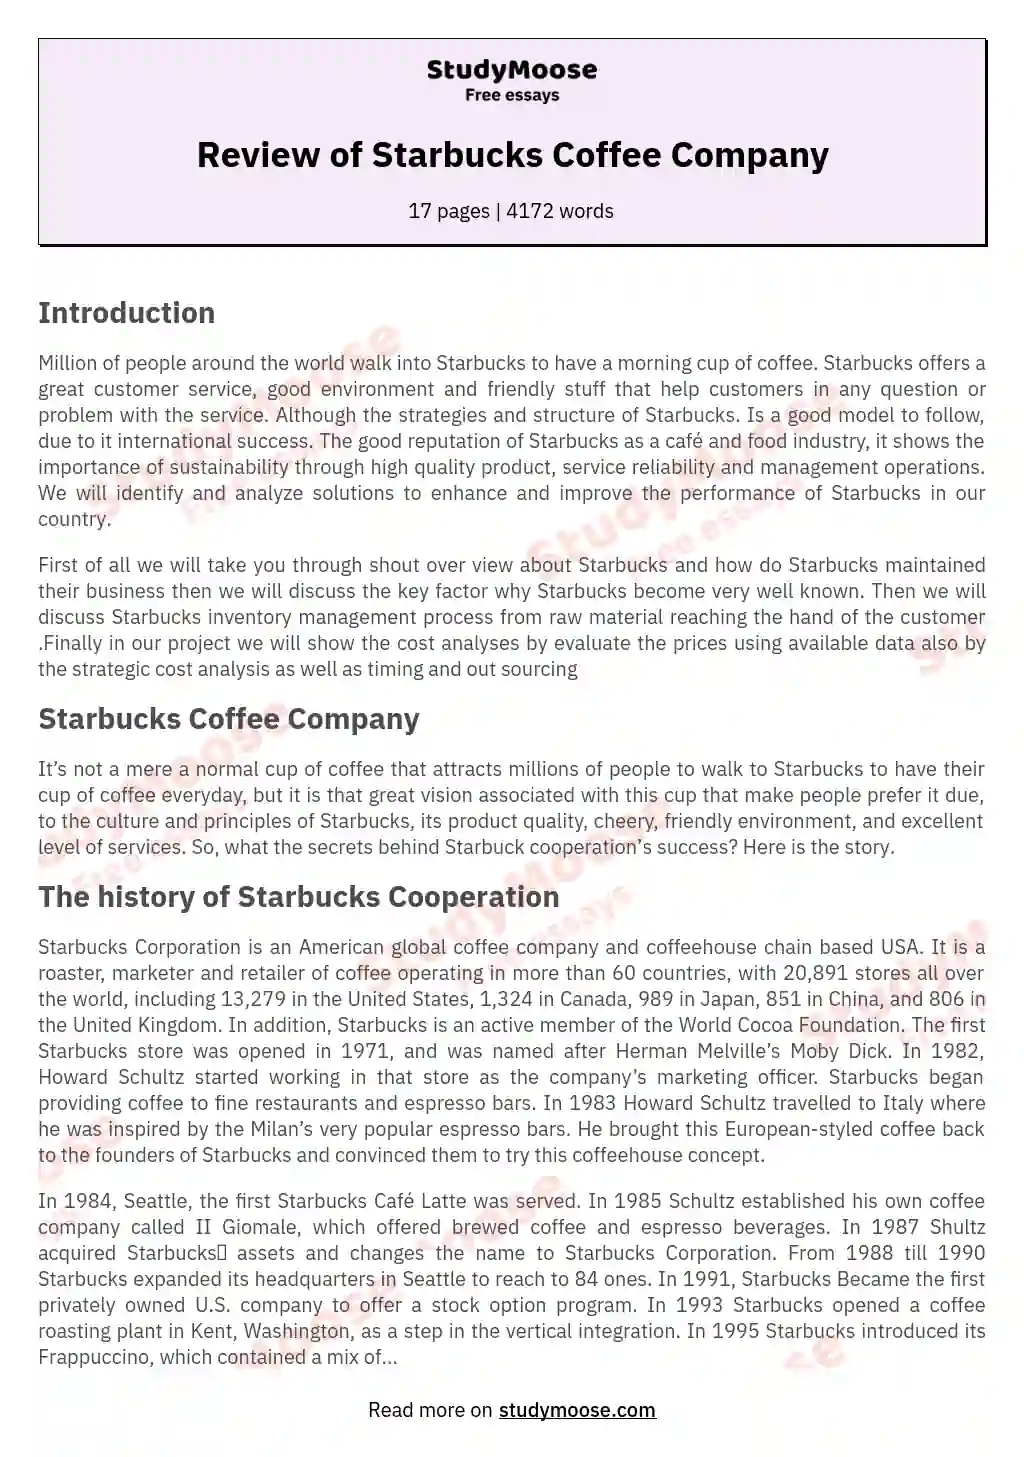 Review of Starbucks Coffee Company